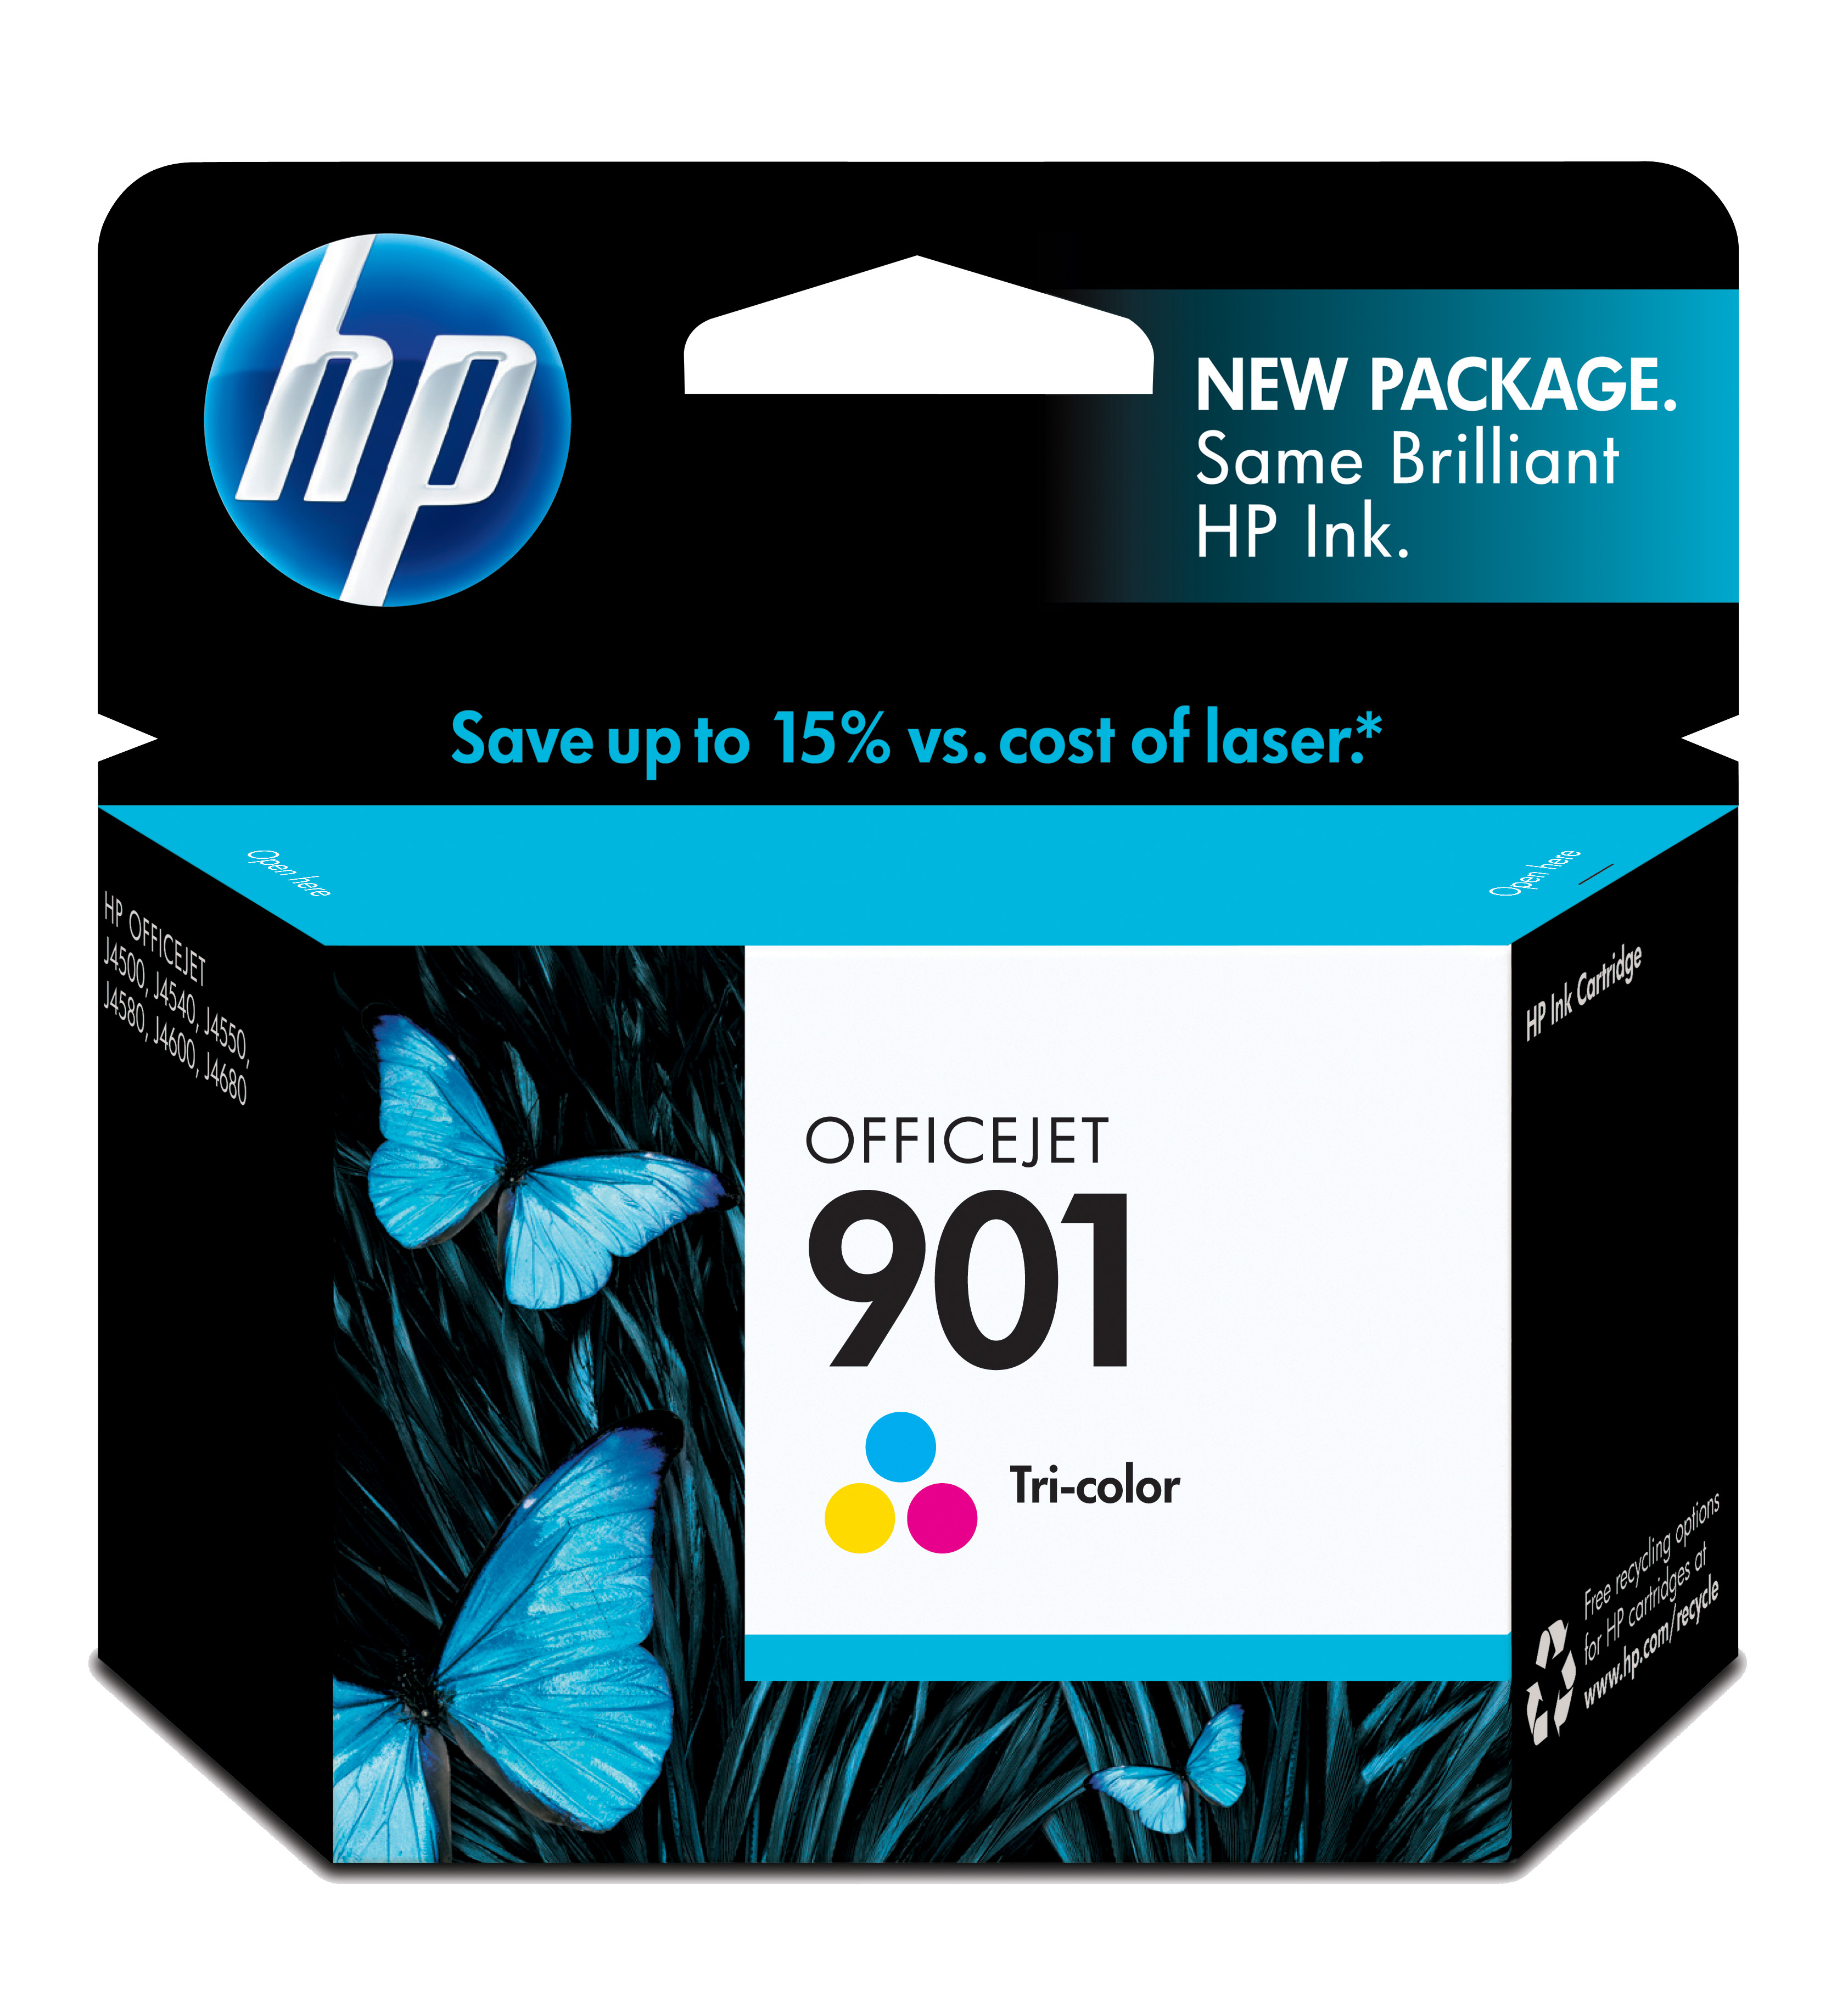 HP 901 Tri-color Officejet Ink Cartridge Genuine HP Inkjet